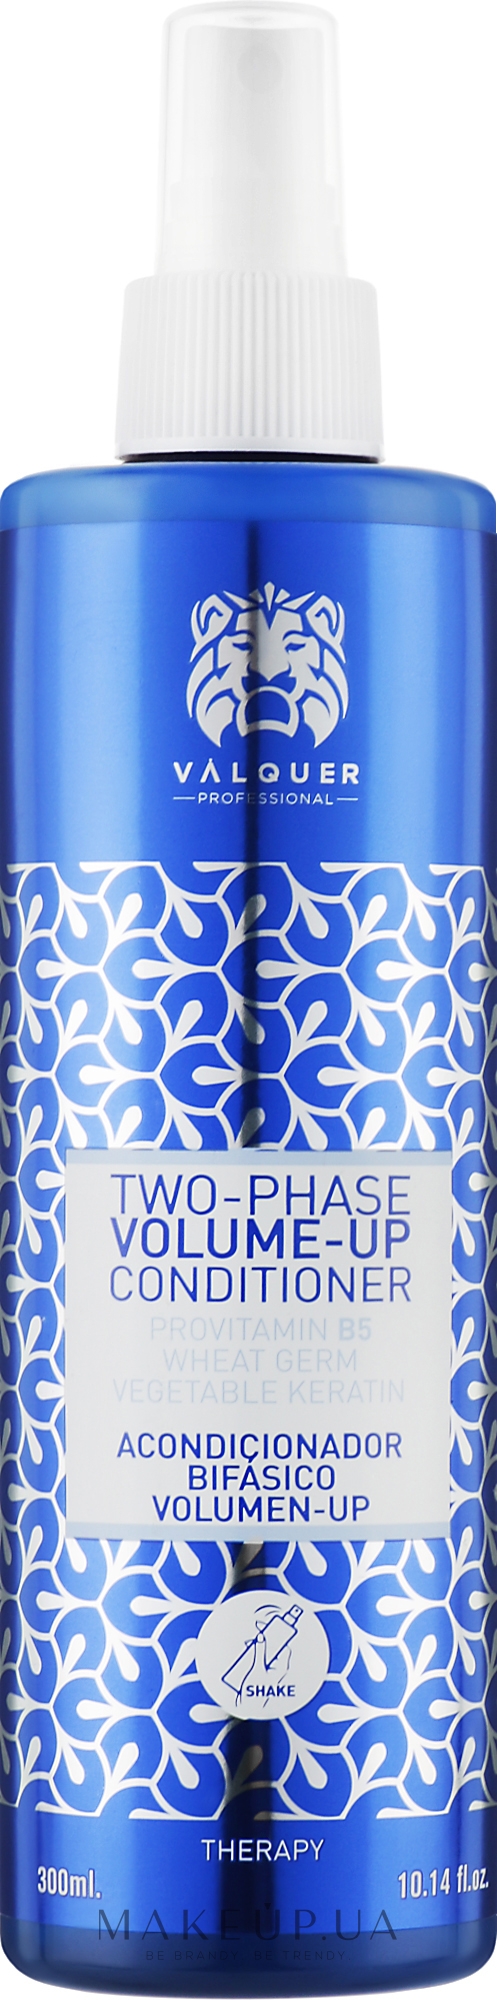 Двухфазный кондиционер для объема волос - Valquer Two-Phase Volume-Up Conditioner — фото 300ml